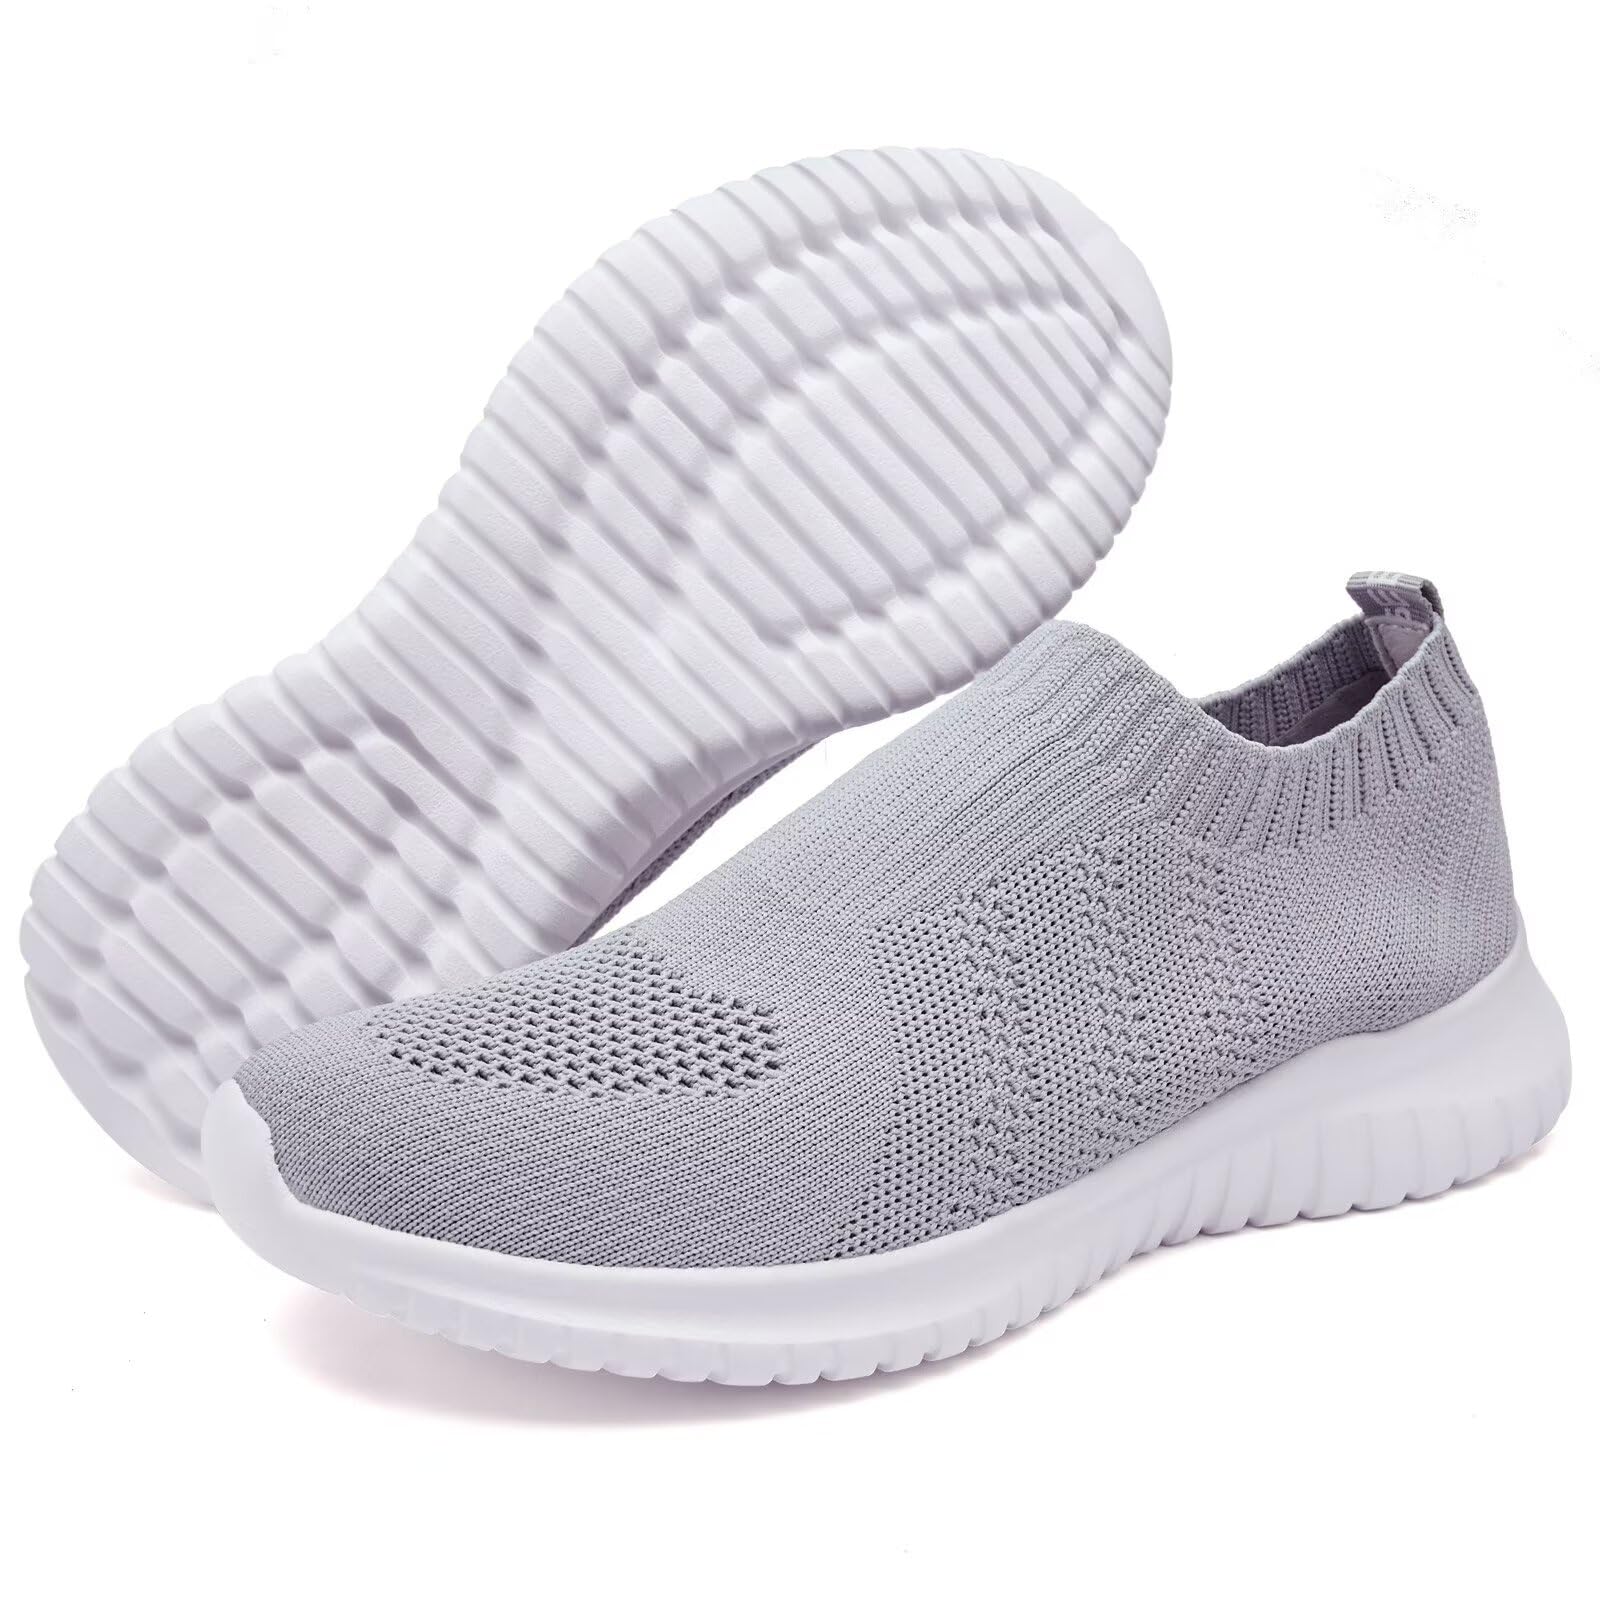 LANCROP Women's Lightweight Walking Shoes - Casual Breathable Mesh Slip On Sneakers Wide 7.5 US, Label 38 Grey